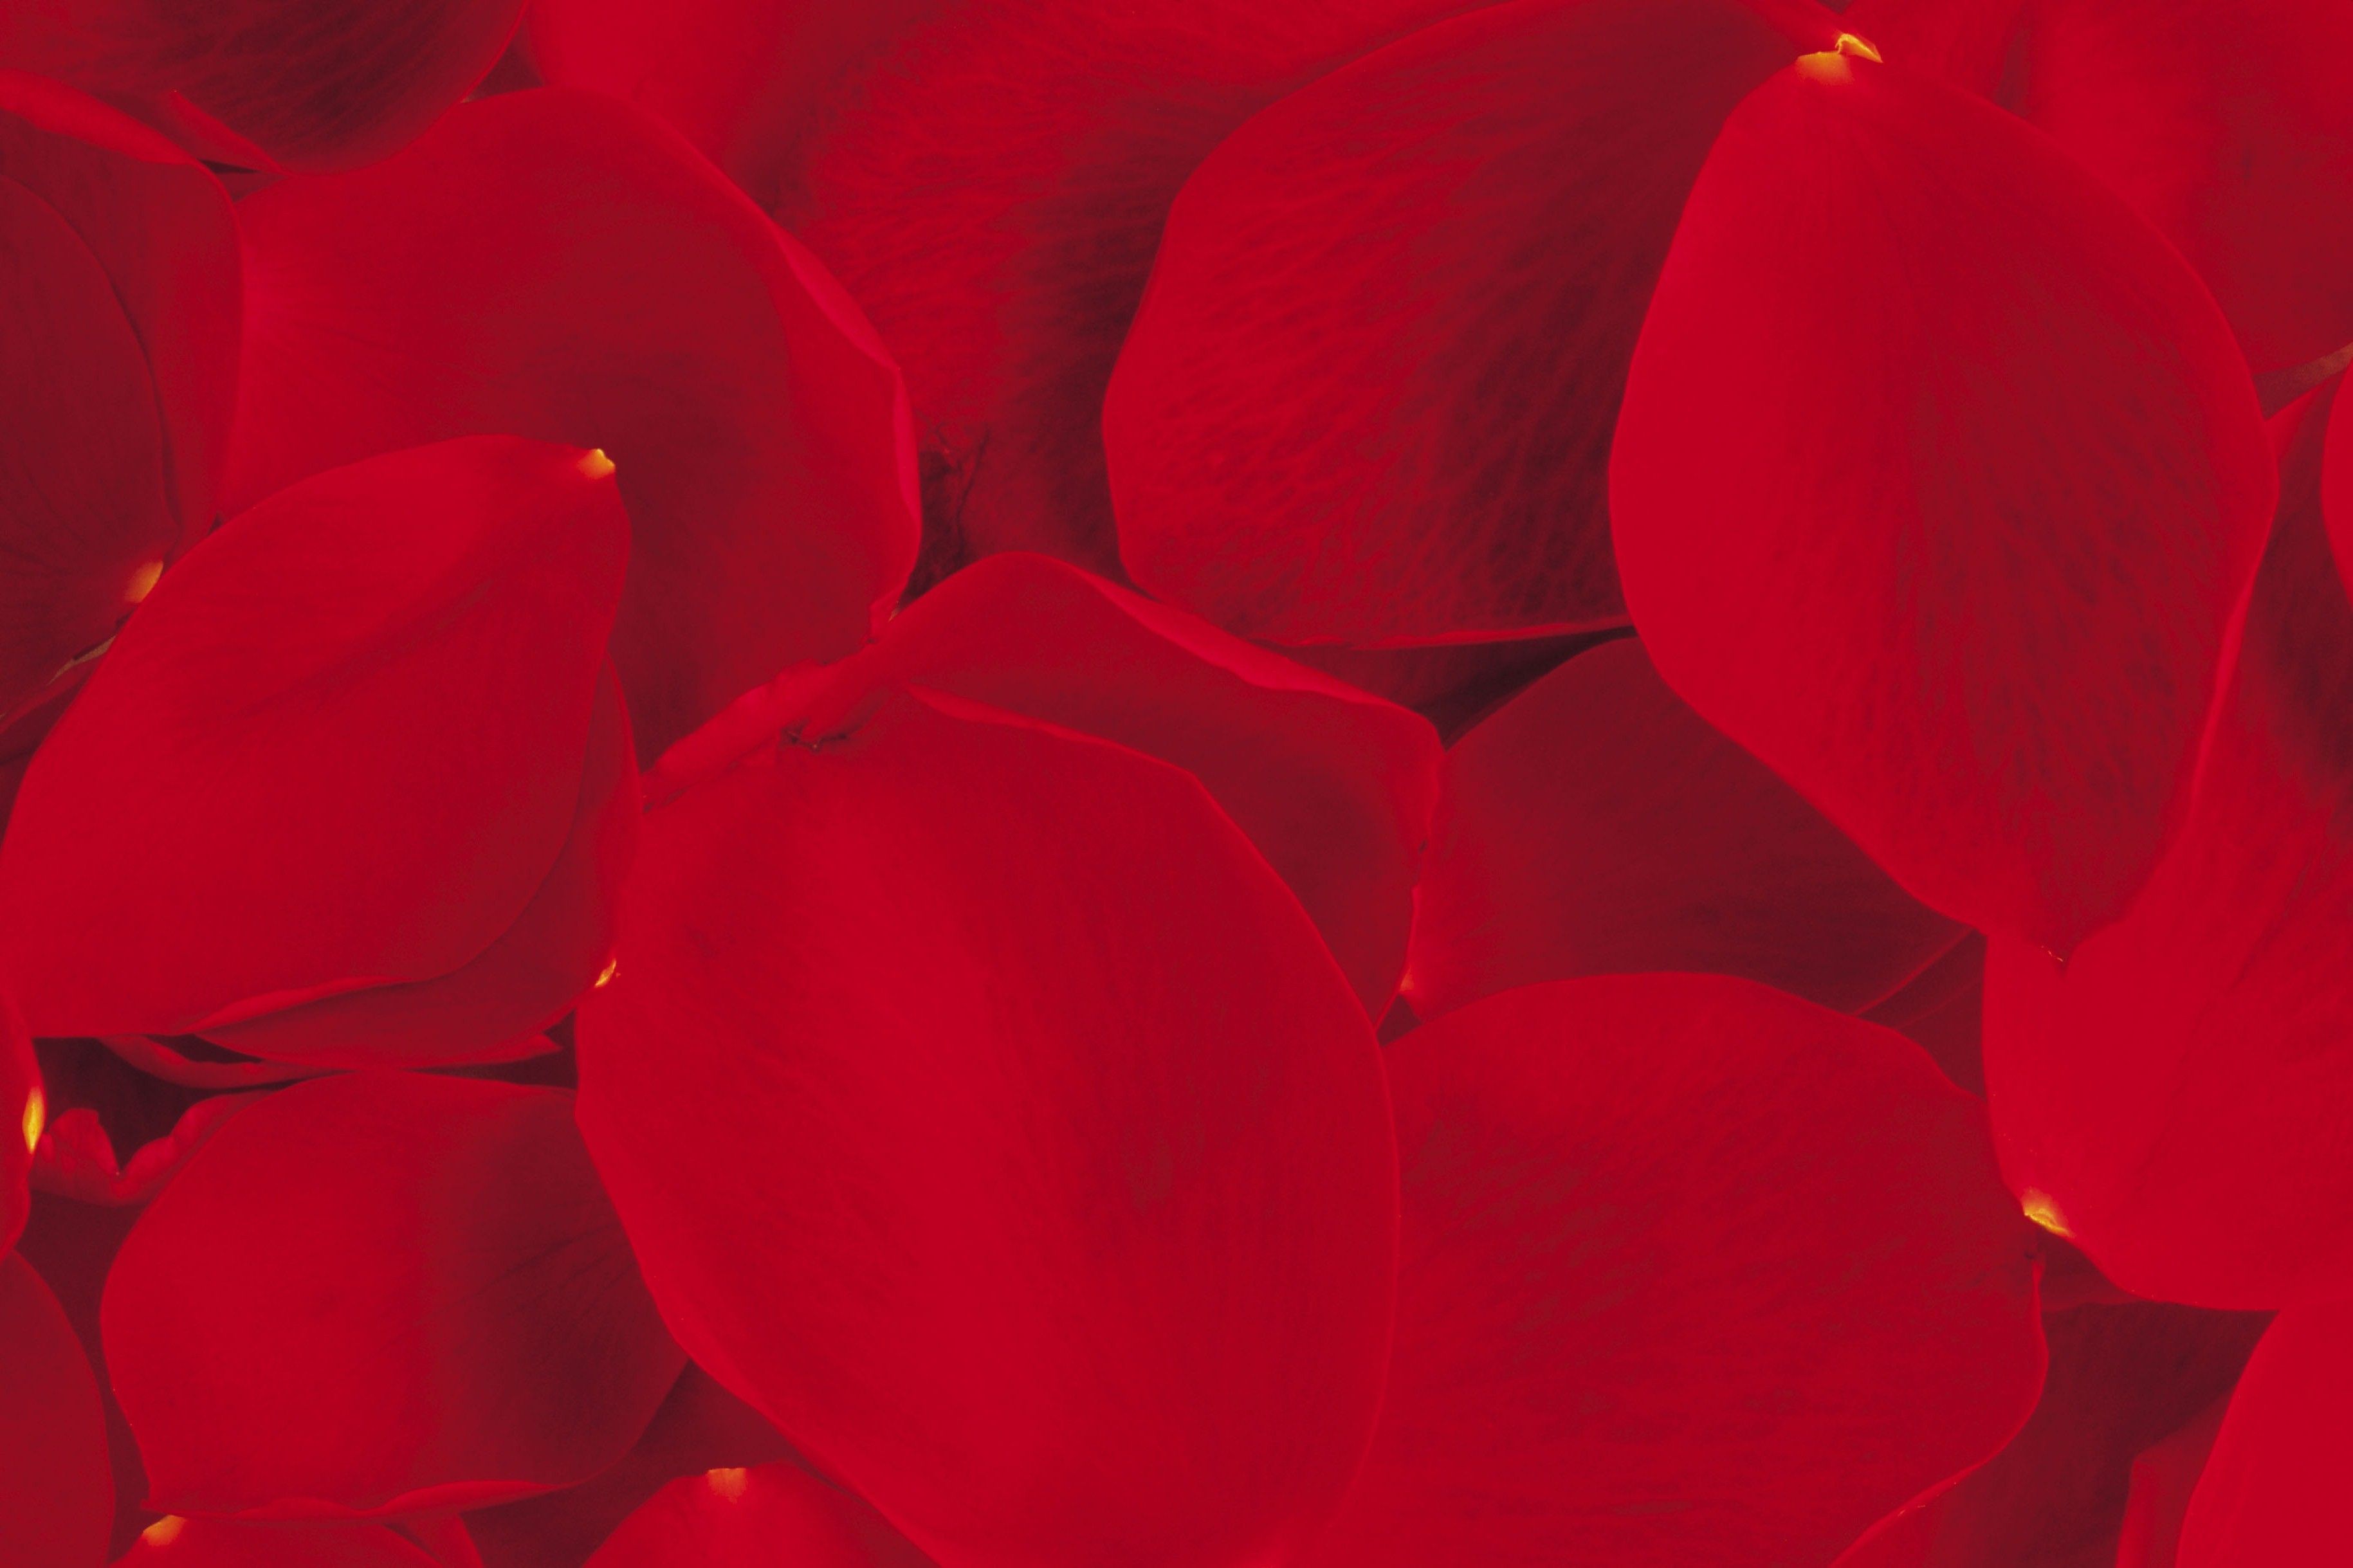 Free photo: Red rose petals, Petals, Red